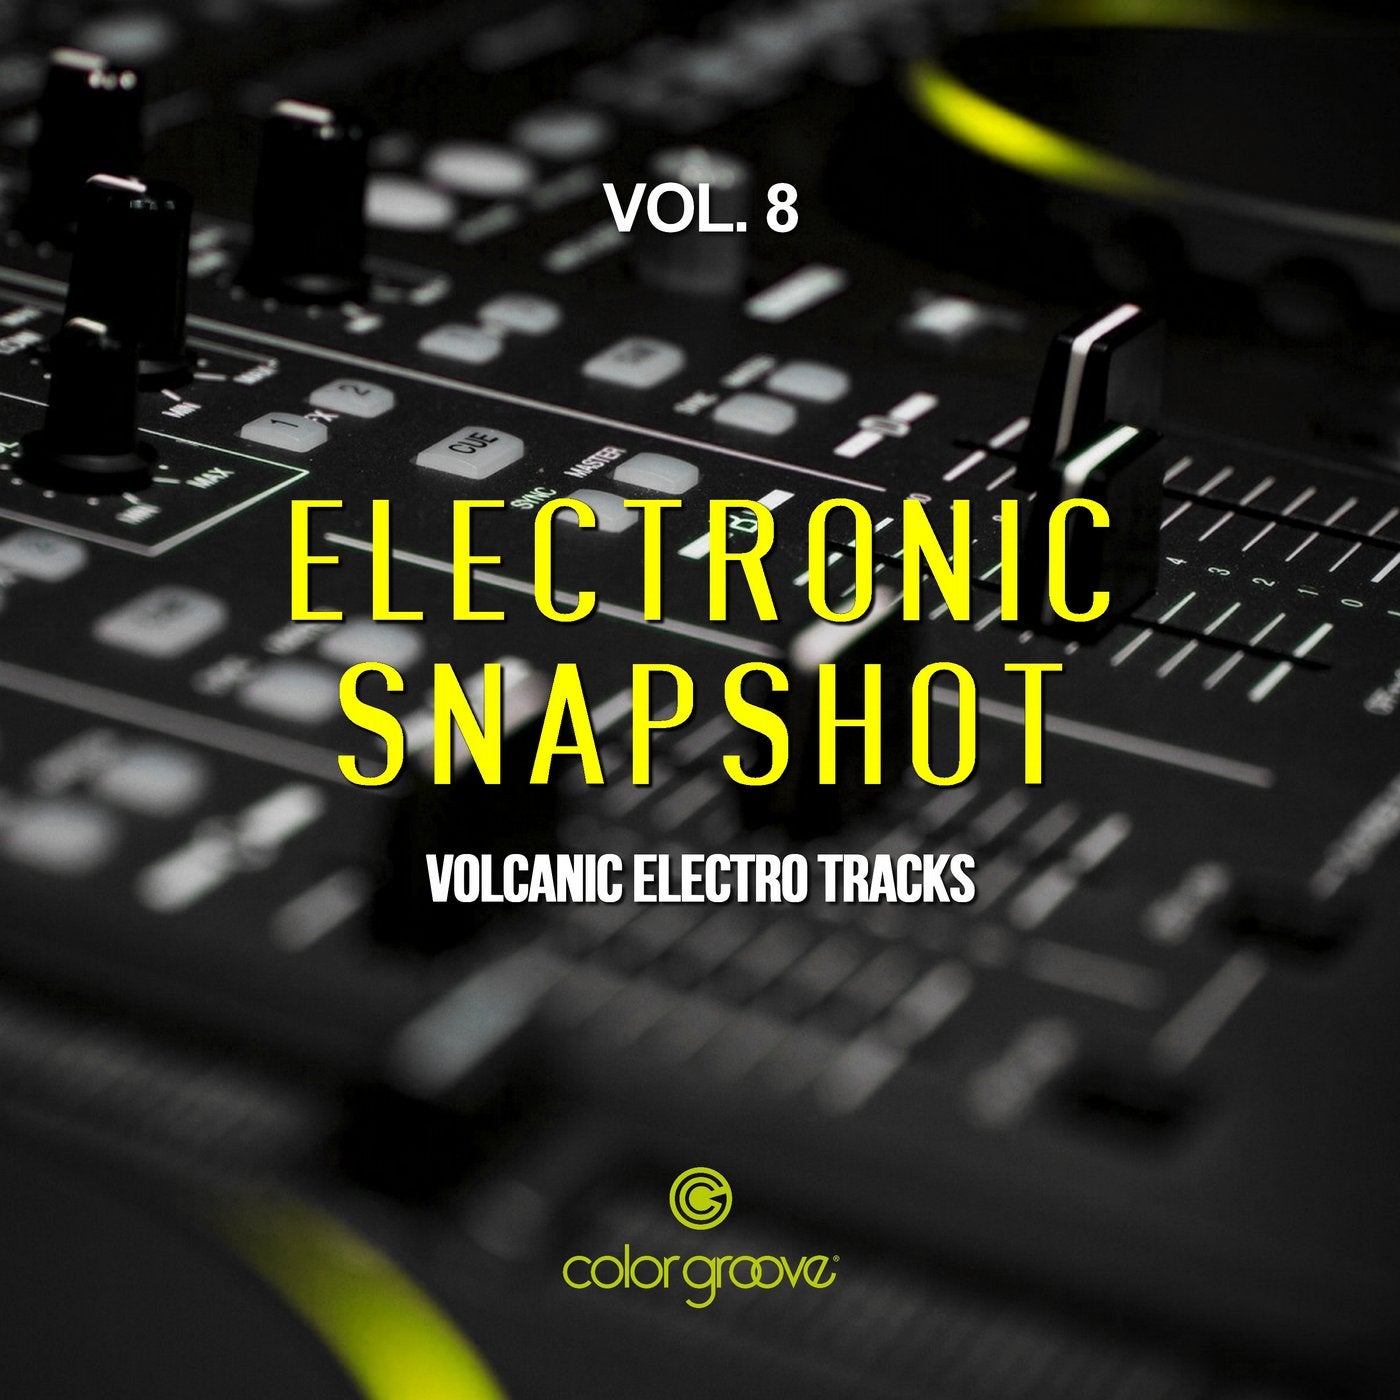 Electronic Snapshot, Vol. 8 (Volcanic Electro Tracks)